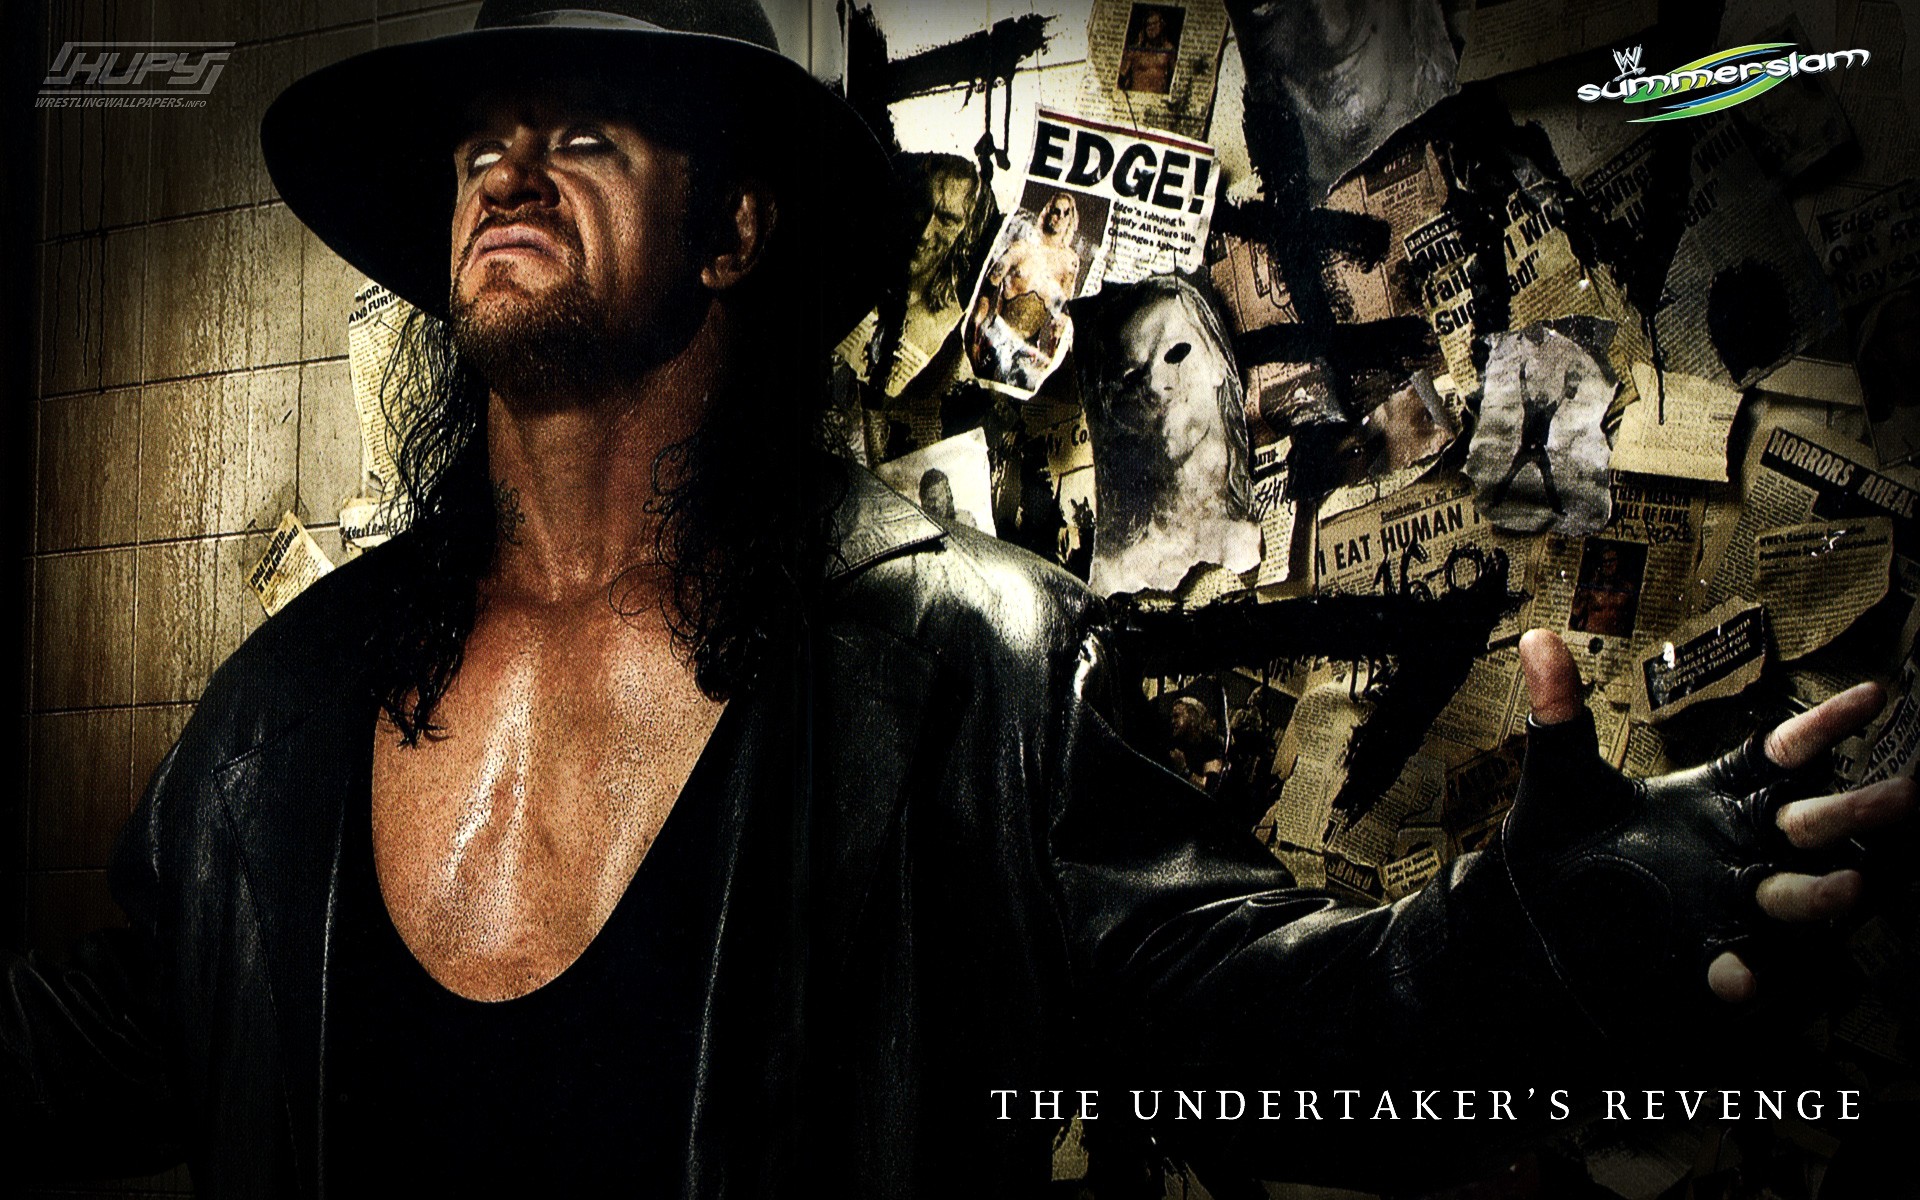 The Undertaker Wallpaper